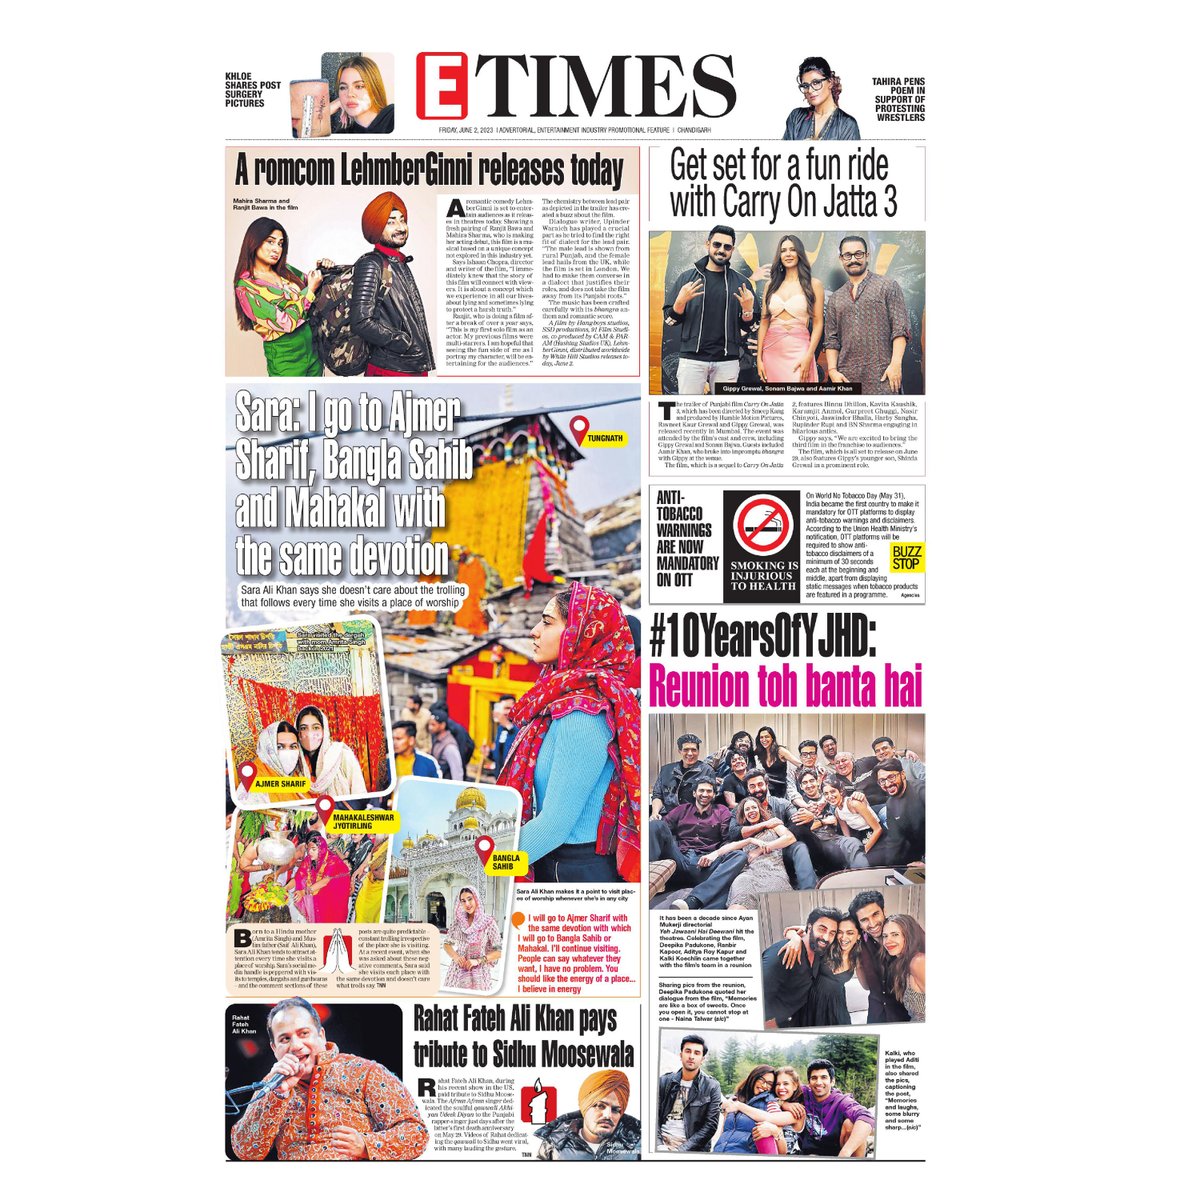 Are you missing #ETimes print edition? Log on to epaper.timesofindia.com to read..
#lehmberginni #mahirasharma #ranjitbawa #carryonjatta3 #aamirkhan #sonambajwa #gippygrewal #tahira #khloekardashian #surgerypictures #saraalikhan #ajmersharif #mahakaleshwarjyotirling #banglasahib